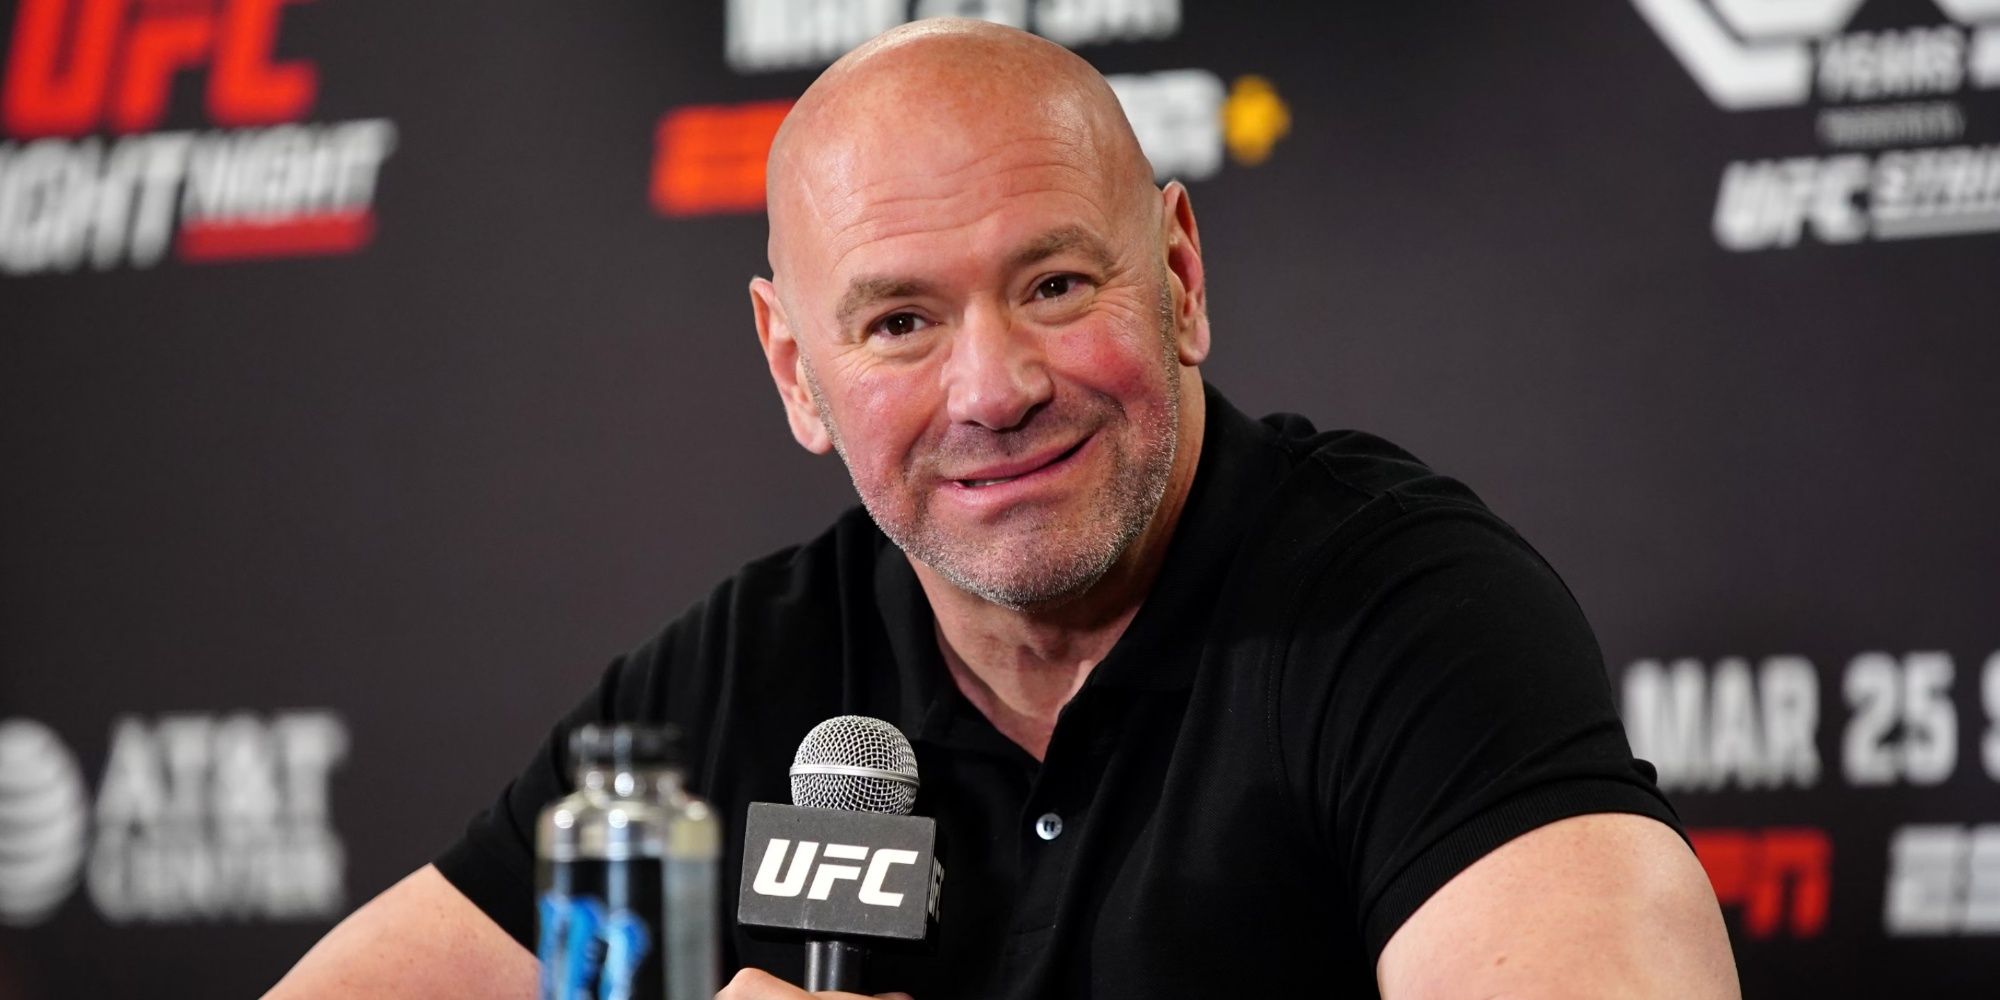 UFC CEO Dana White